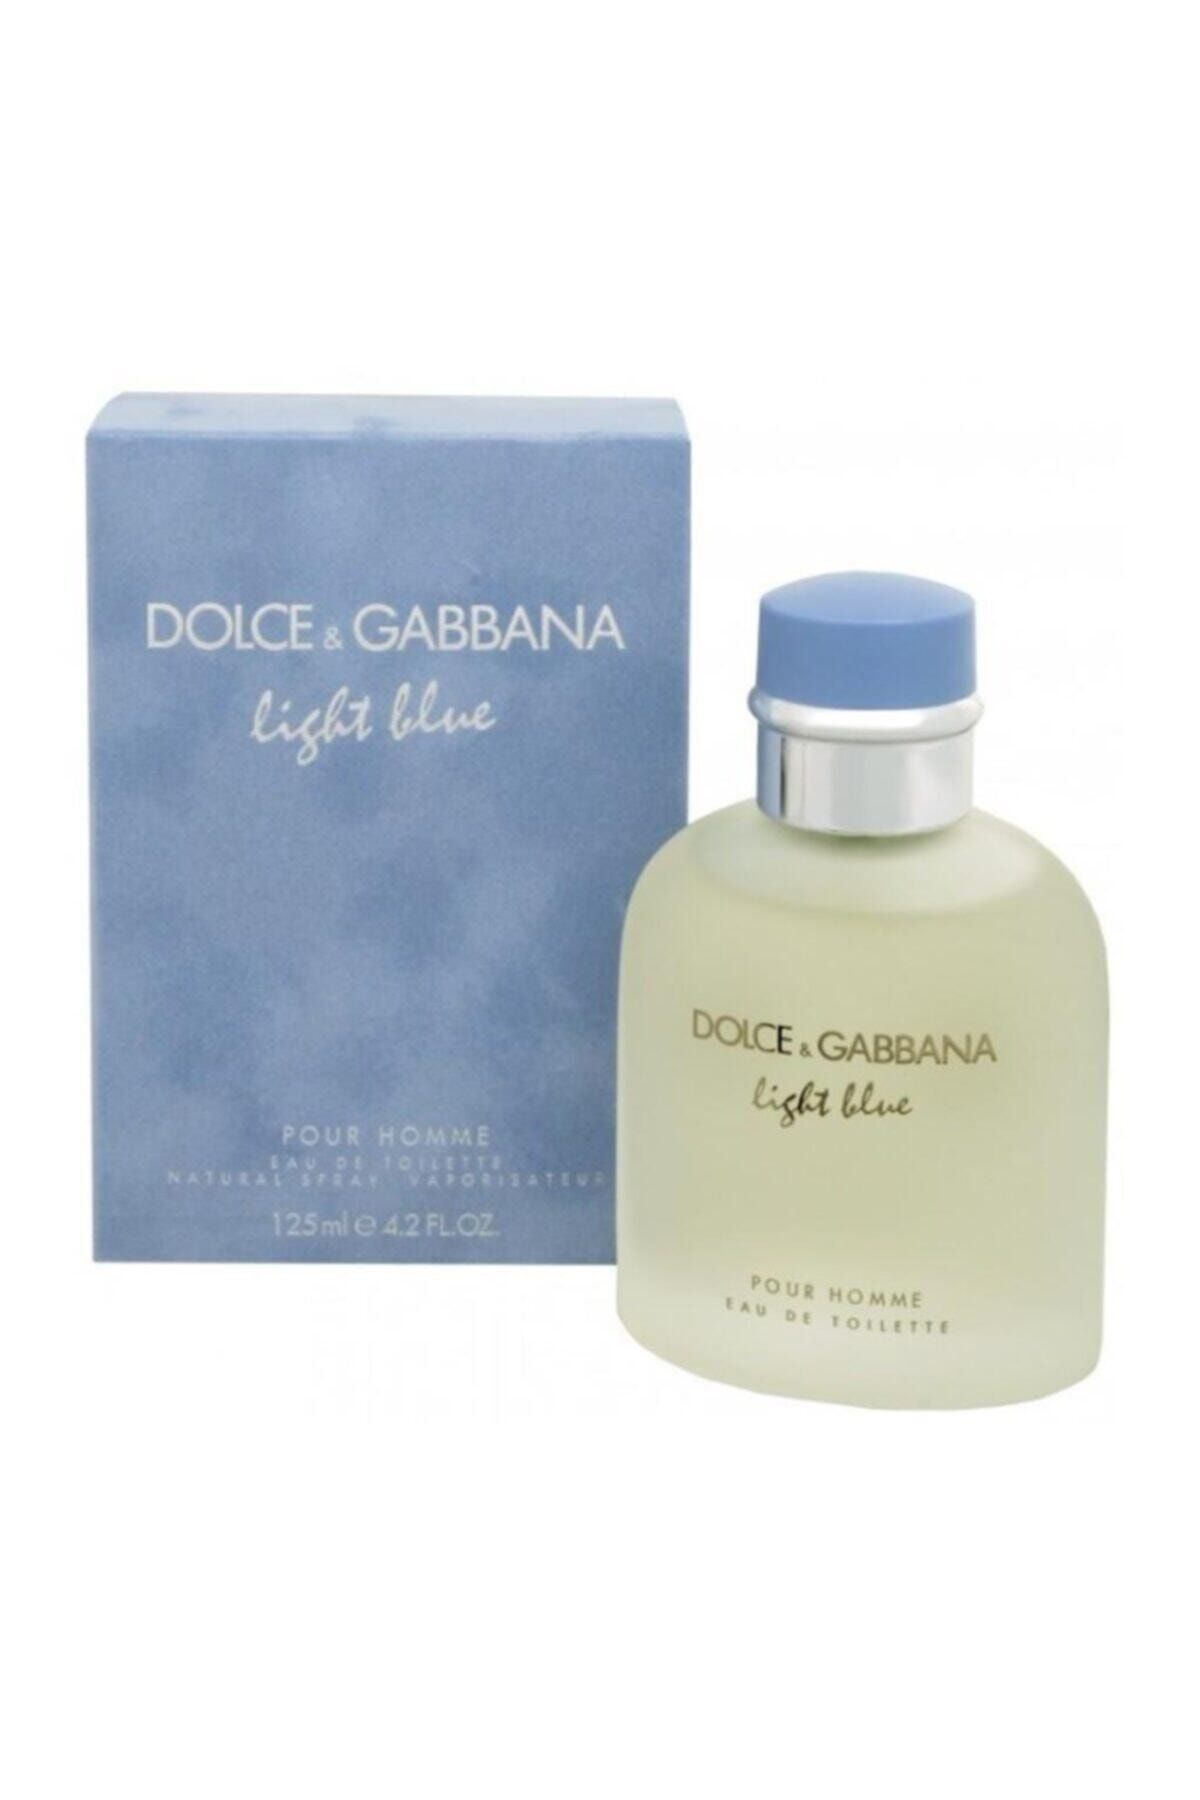 Dolce gabbana forever pour homme. Dolce Gabbana Light Blue мужские 125 ml. Духи мужские Дольче Габбана Лайт Блю. Dolce&Gabbana Light Blue туалетная вода 100 мл. Dolce Gabbana Light Blue pour homme Eau de Toilette.